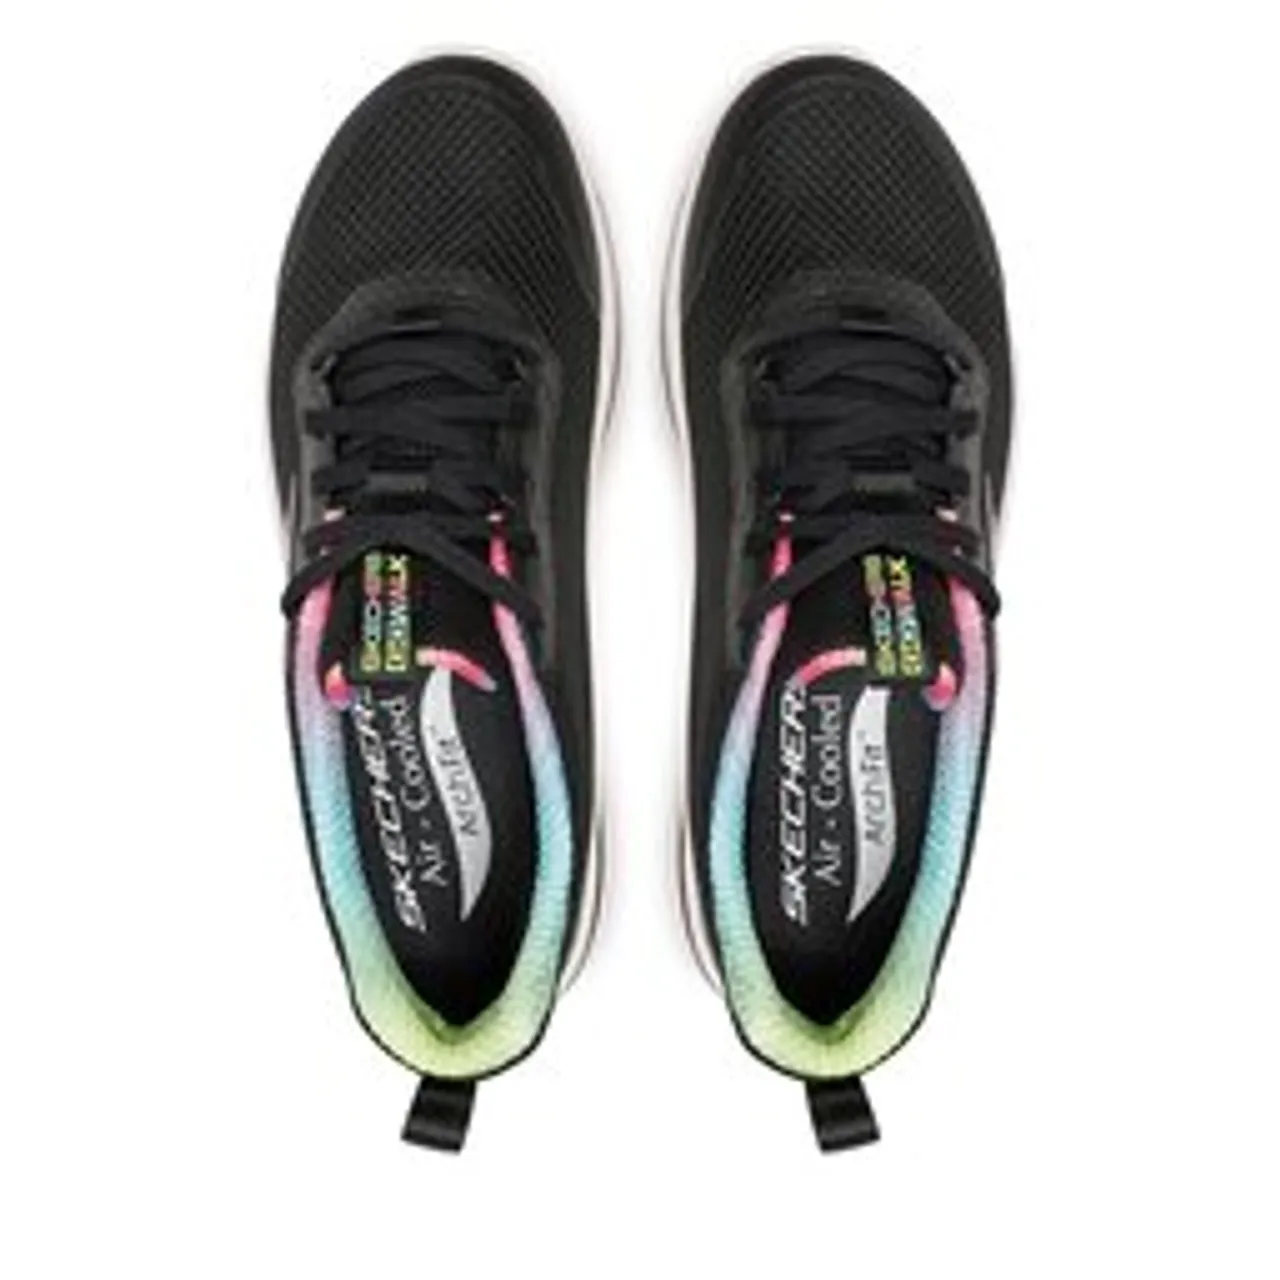 Sneakers Skechers Go Walk Arch Fit 124868/BKHP Black/Hot Pink